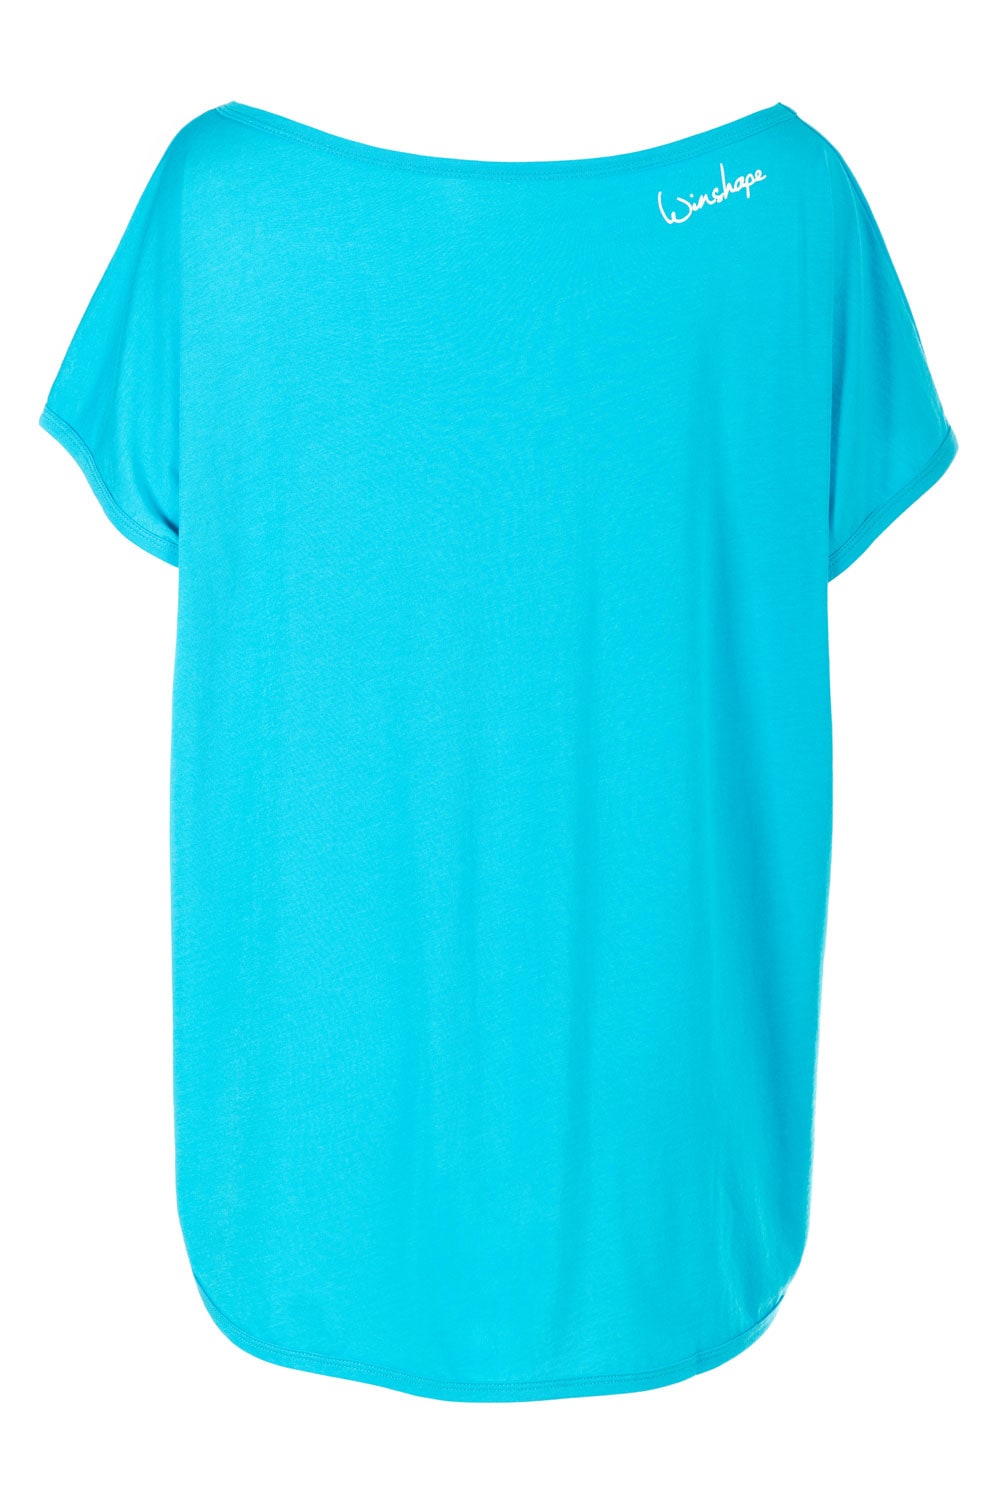 ♕ Winshape Oversize-Shirt »MCT017«, Ultra kaufen leicht versandkostenfrei